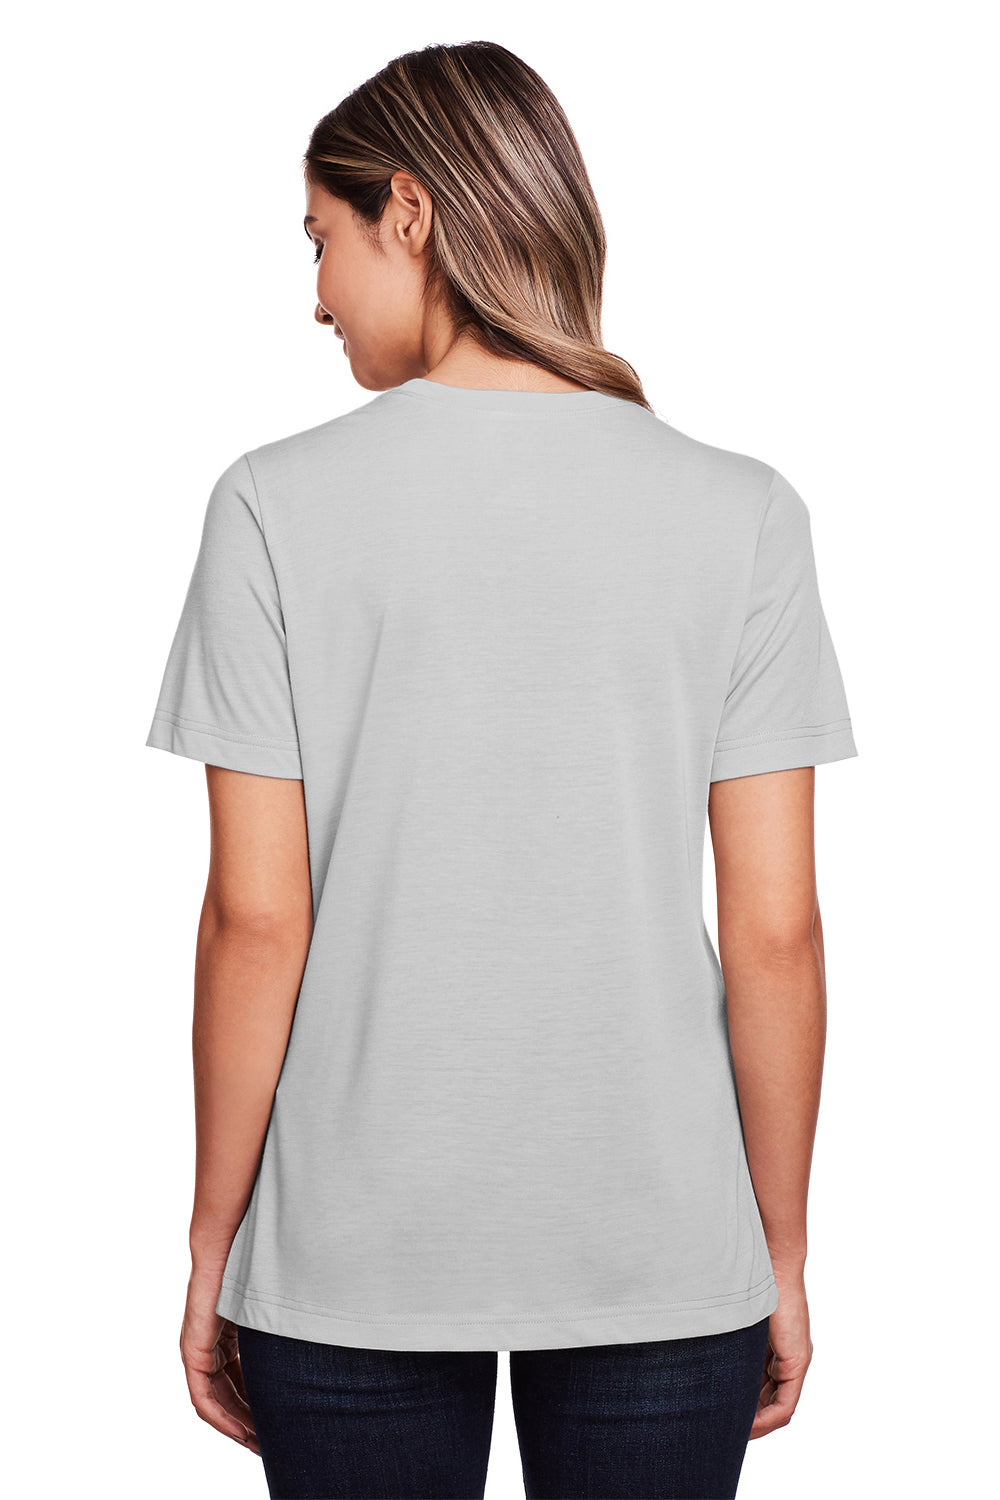 Core 365 CE111W Womens Fusion ChromaSoft Performance Moisture Wicking Short Sleeve Scoop Neck T-Shirt Platinum Grey Back